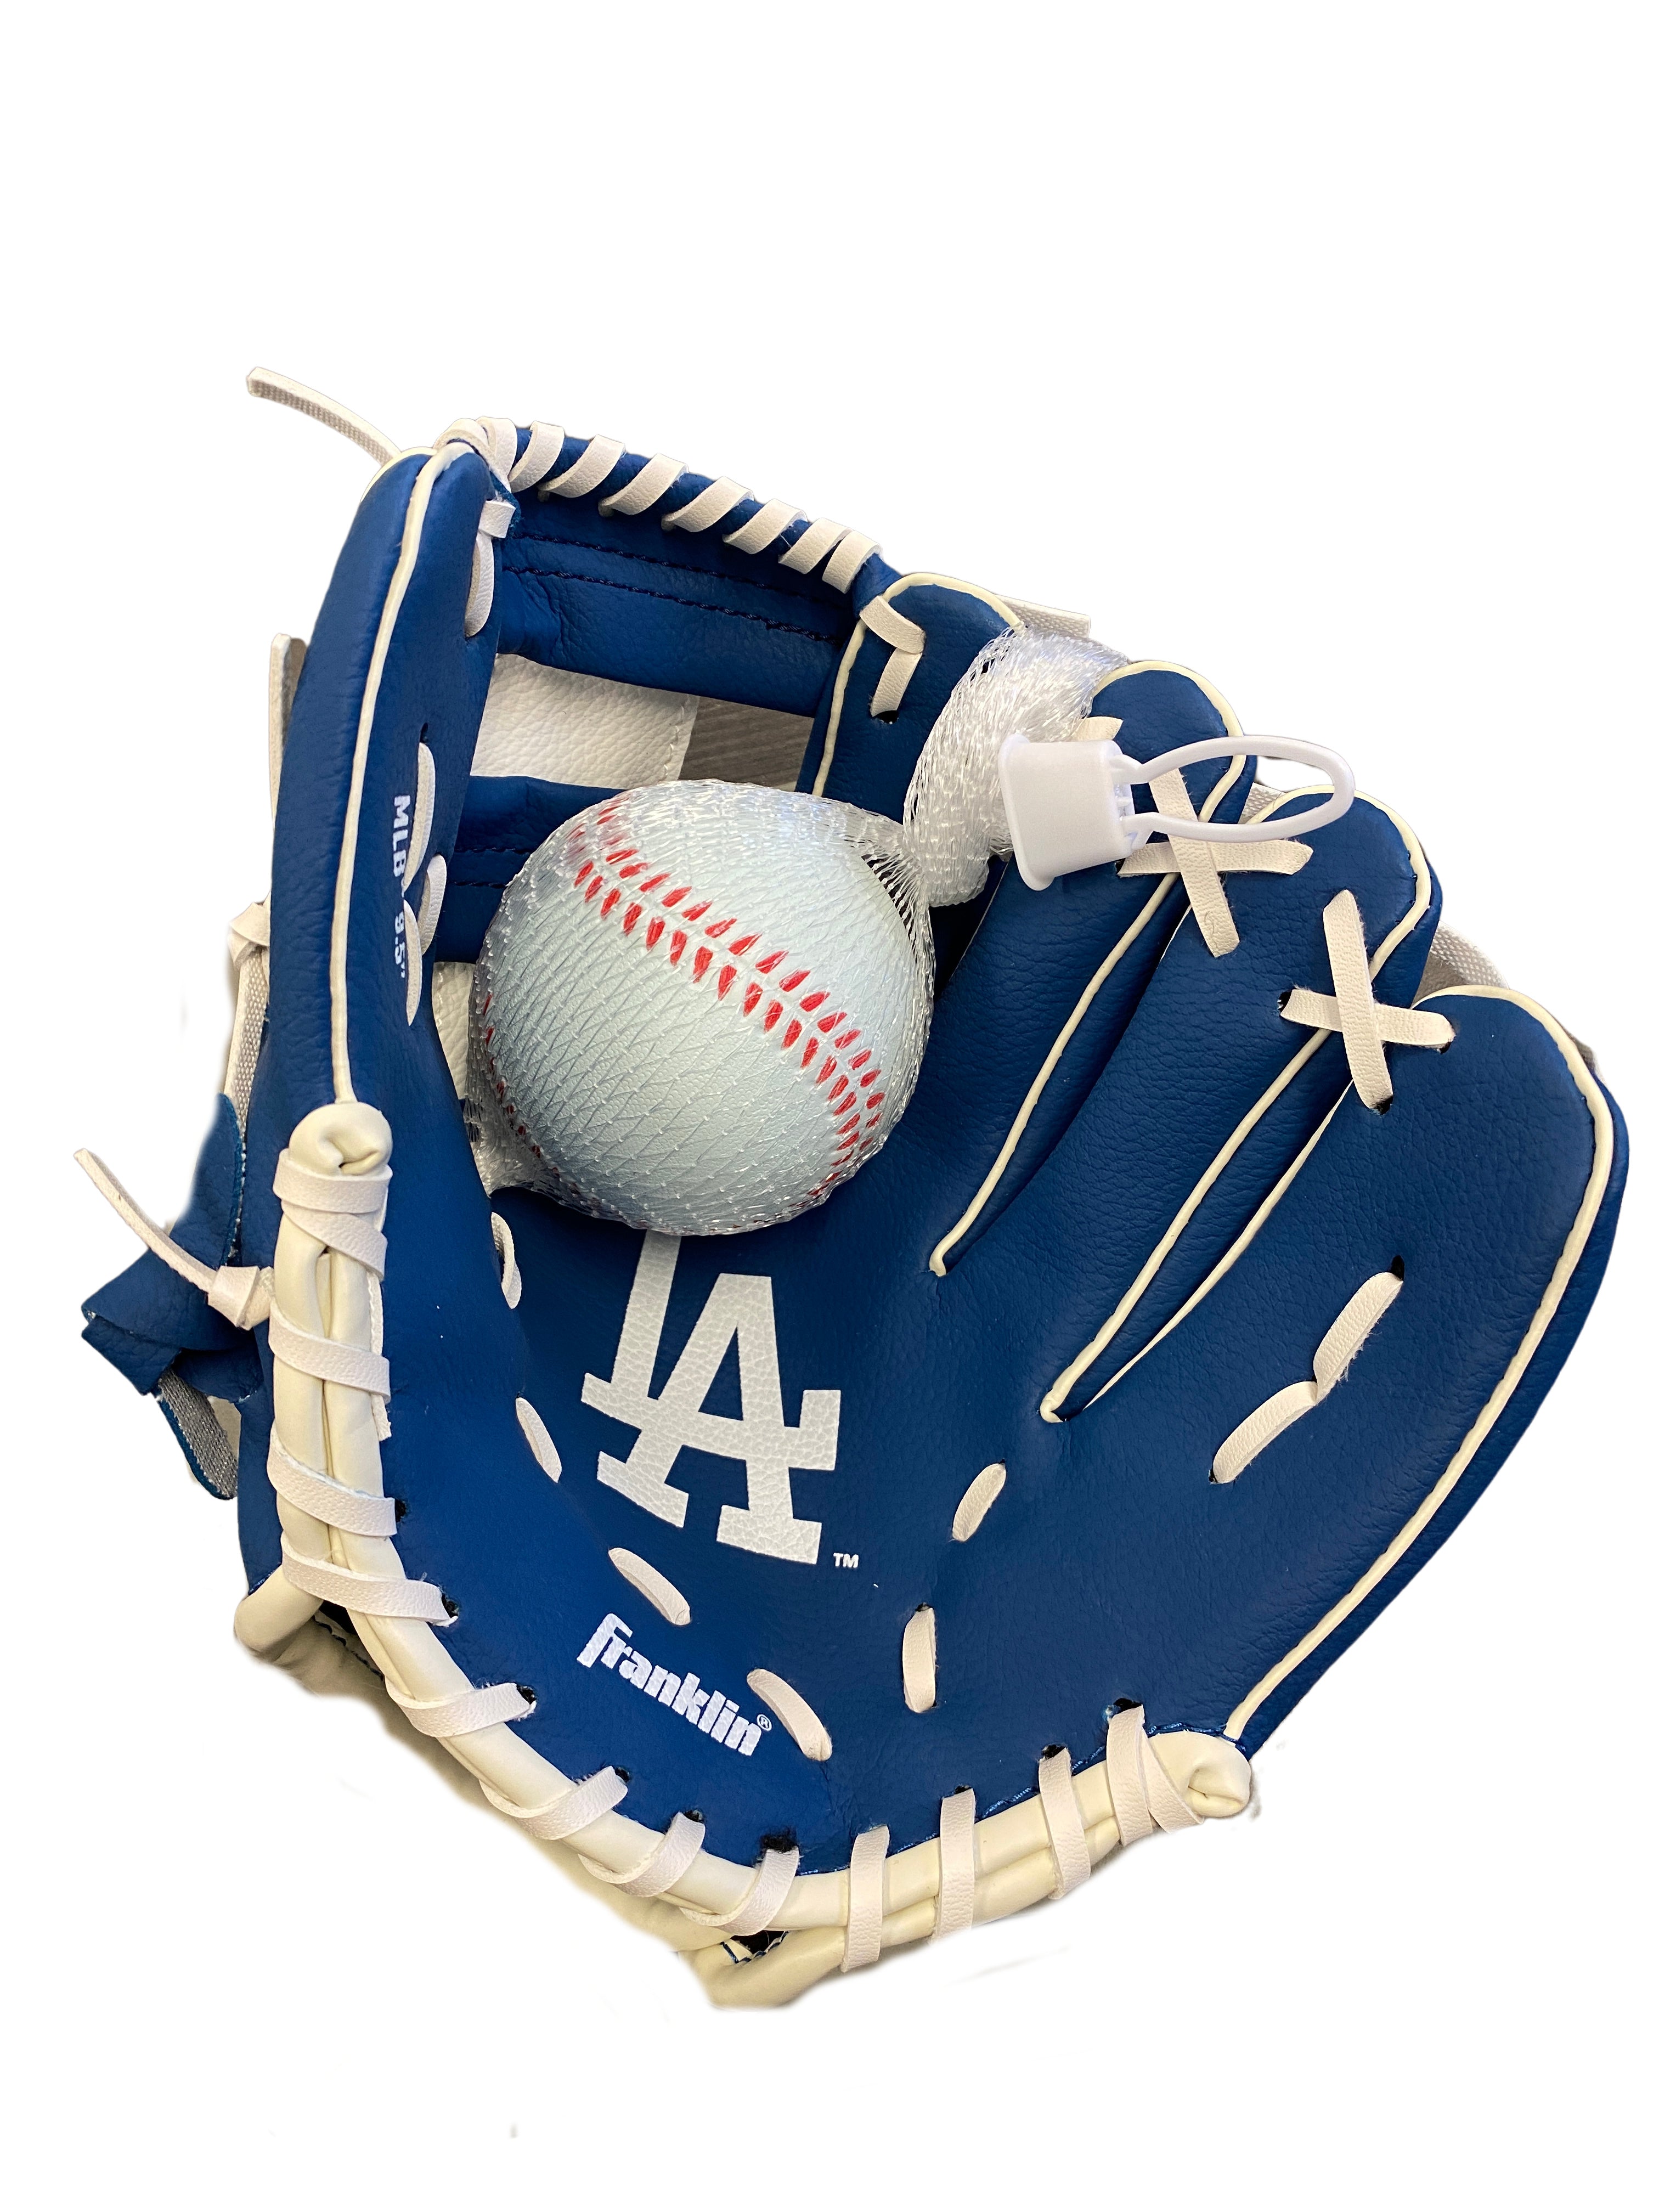 FRANKLIN LA DODGERS MLB TEAM GLOVES AND BALL SET-ROYAL BLUE/WHITE